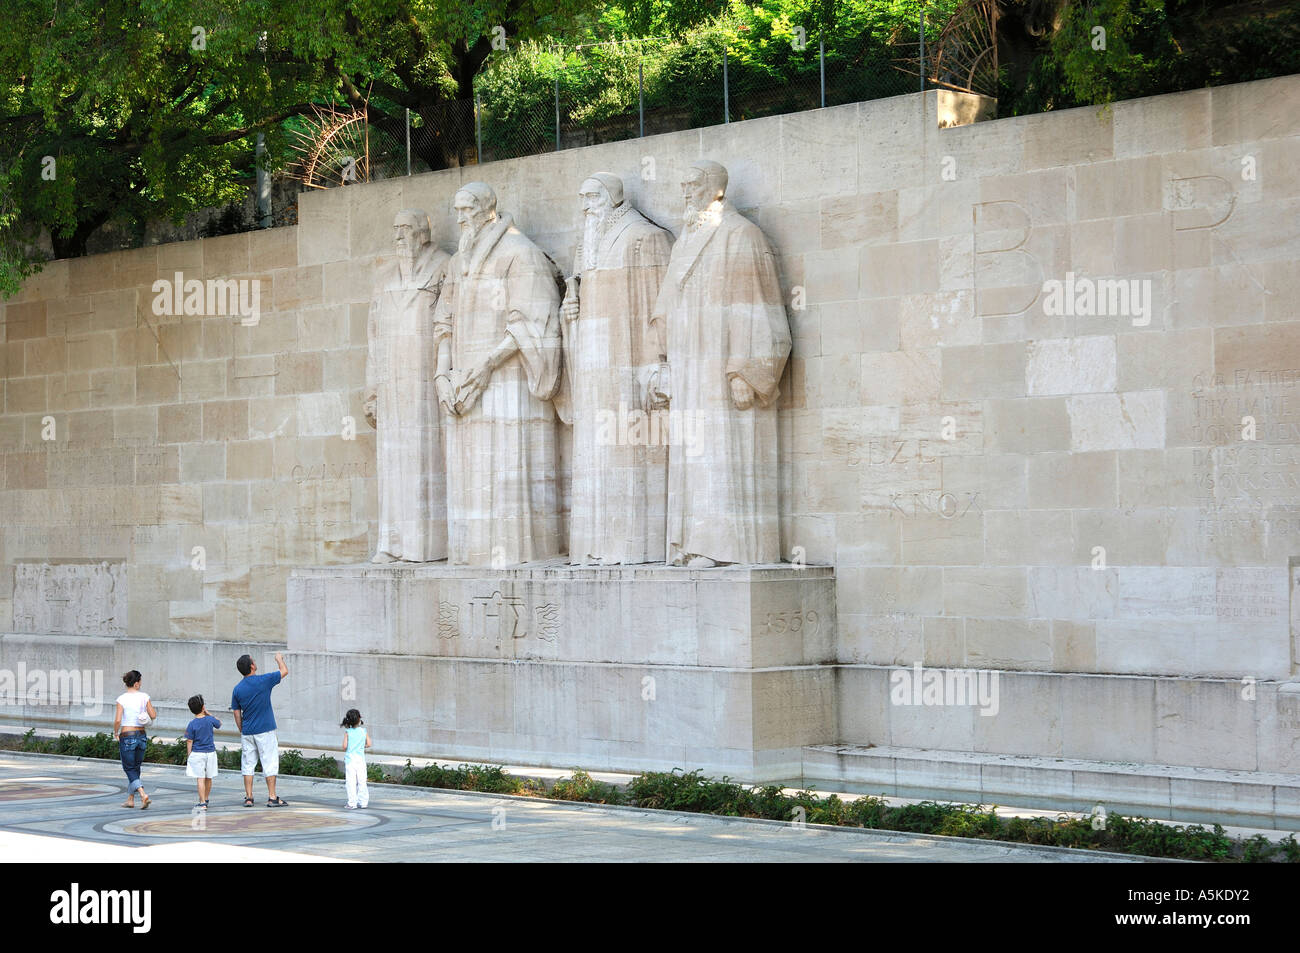 Reformation Denkmal Mauer der Reformatoren v.l.n.r.: Guillaume Farel, Jean Calvin, Theodore Beza, John Knox Genf Schweiz Stockfoto